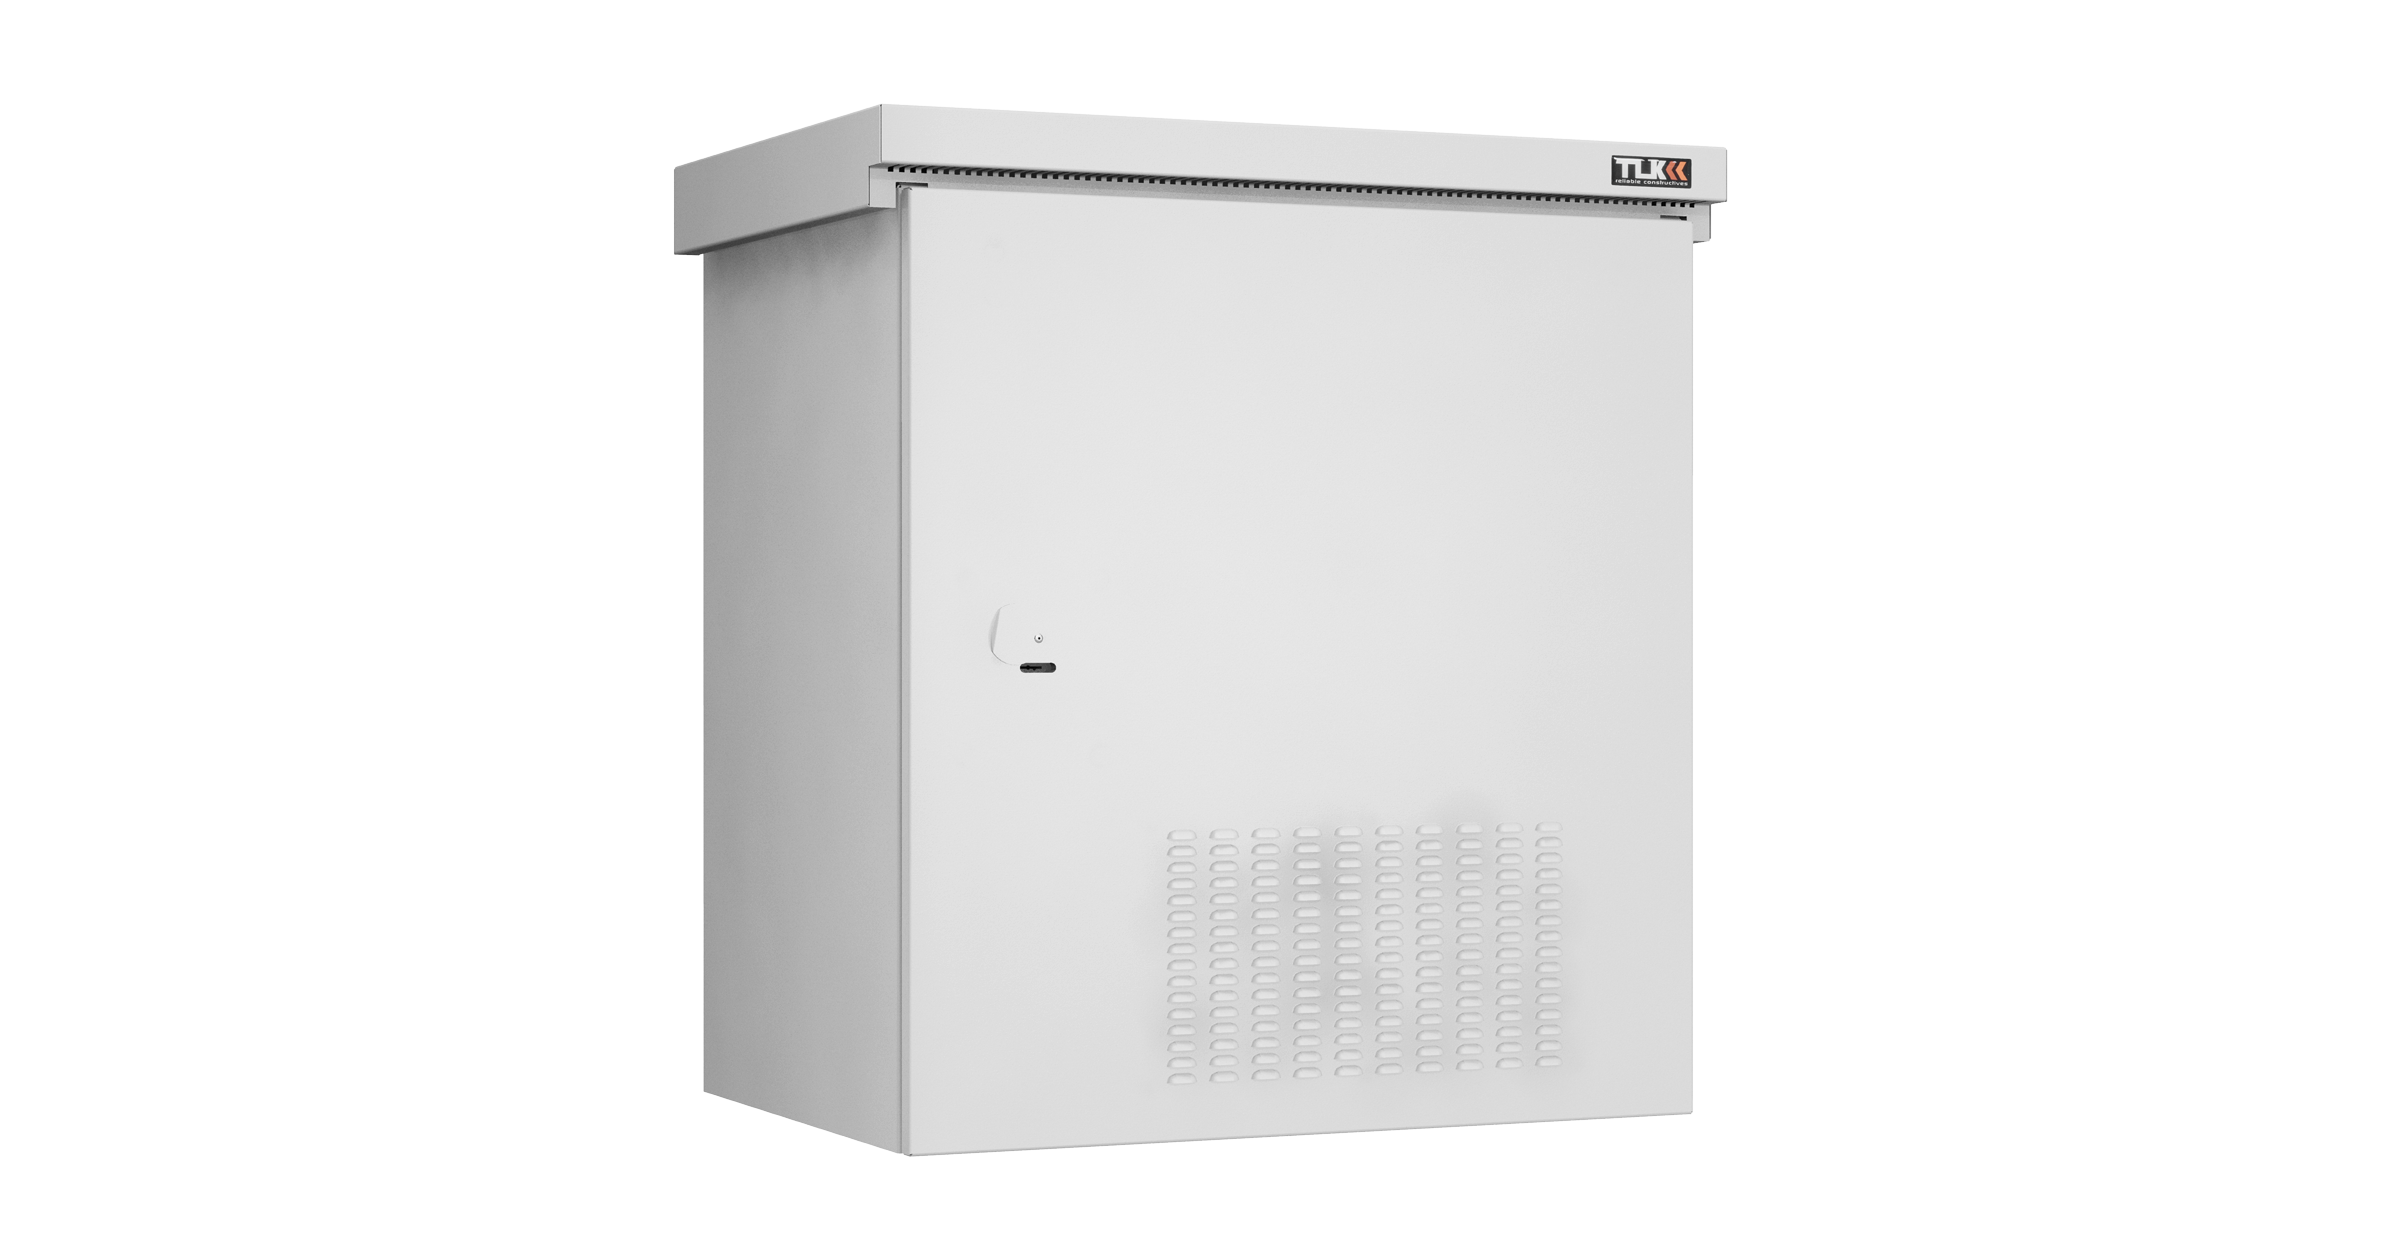 Шкаф климатический настенный 15U 821x566 мм, металл, серый, TLK Climatic-Lite (TWK) TWK-158256-M-GY-KIT01 (TWK-158256-M-GY-KIT01)